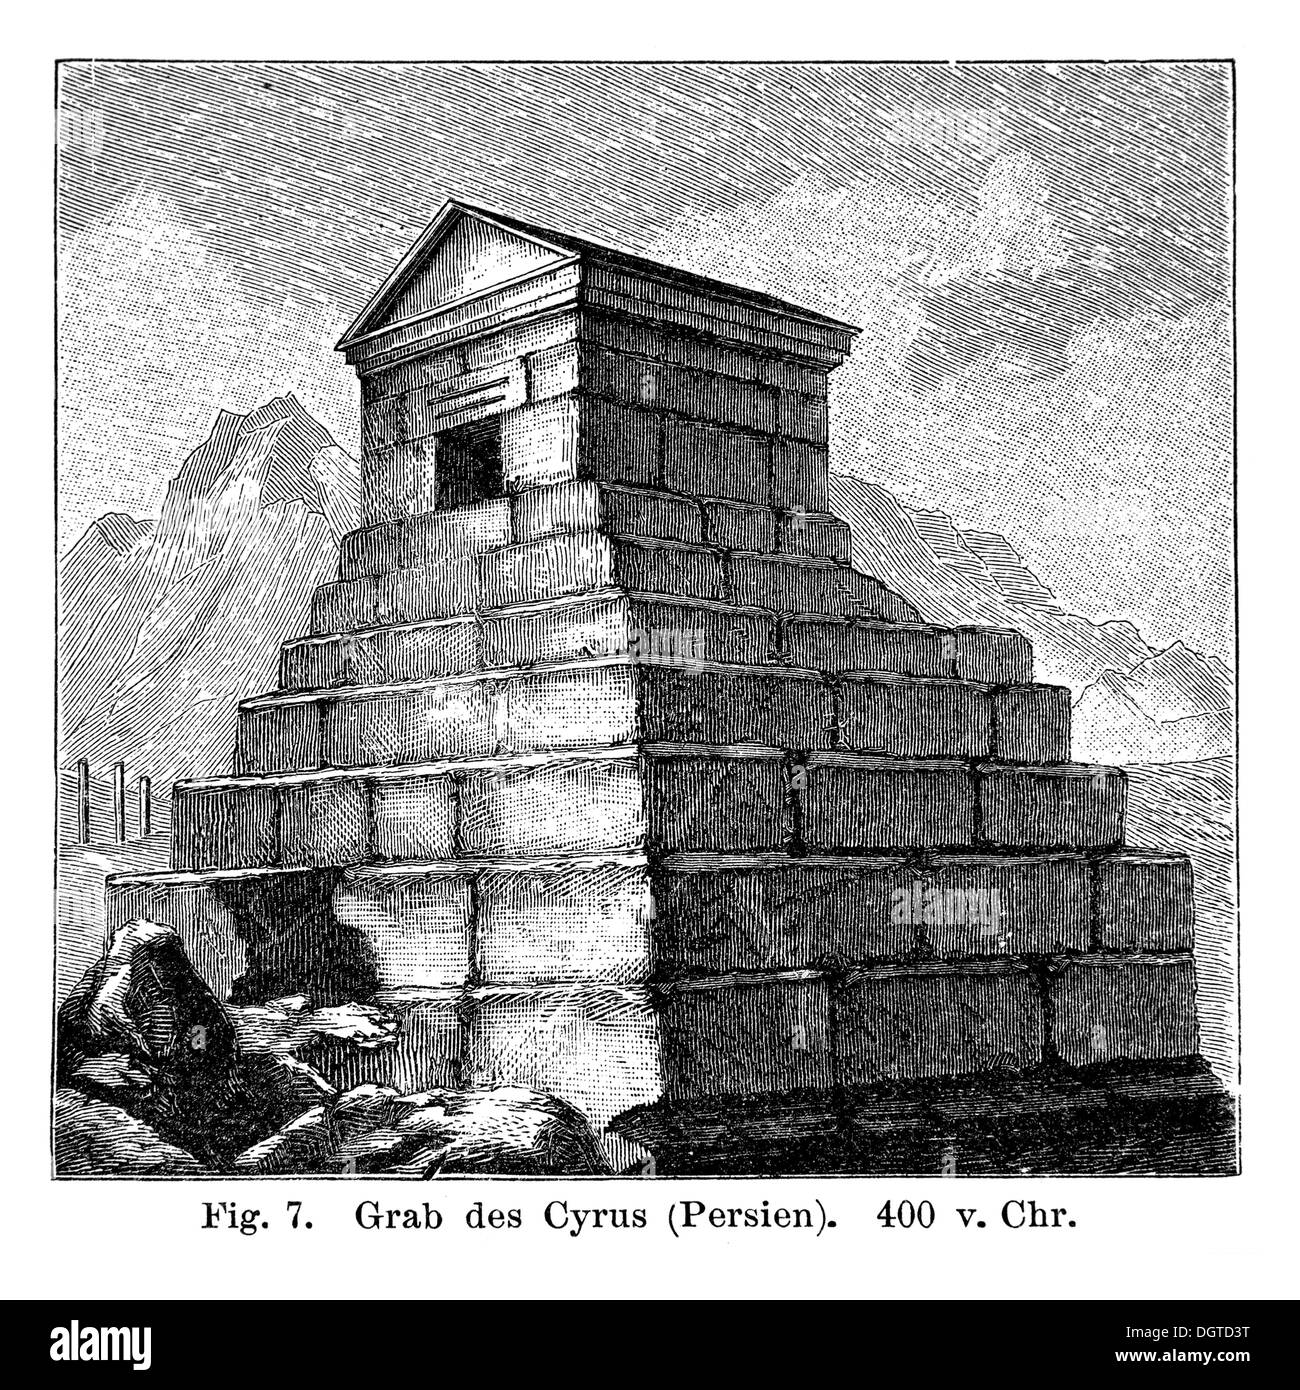 Mausoleum of Cyrus, Persia, 400 BC, illustration, Meyers Konversations-Lexikon encyclopedia, 1897 Stock Photo